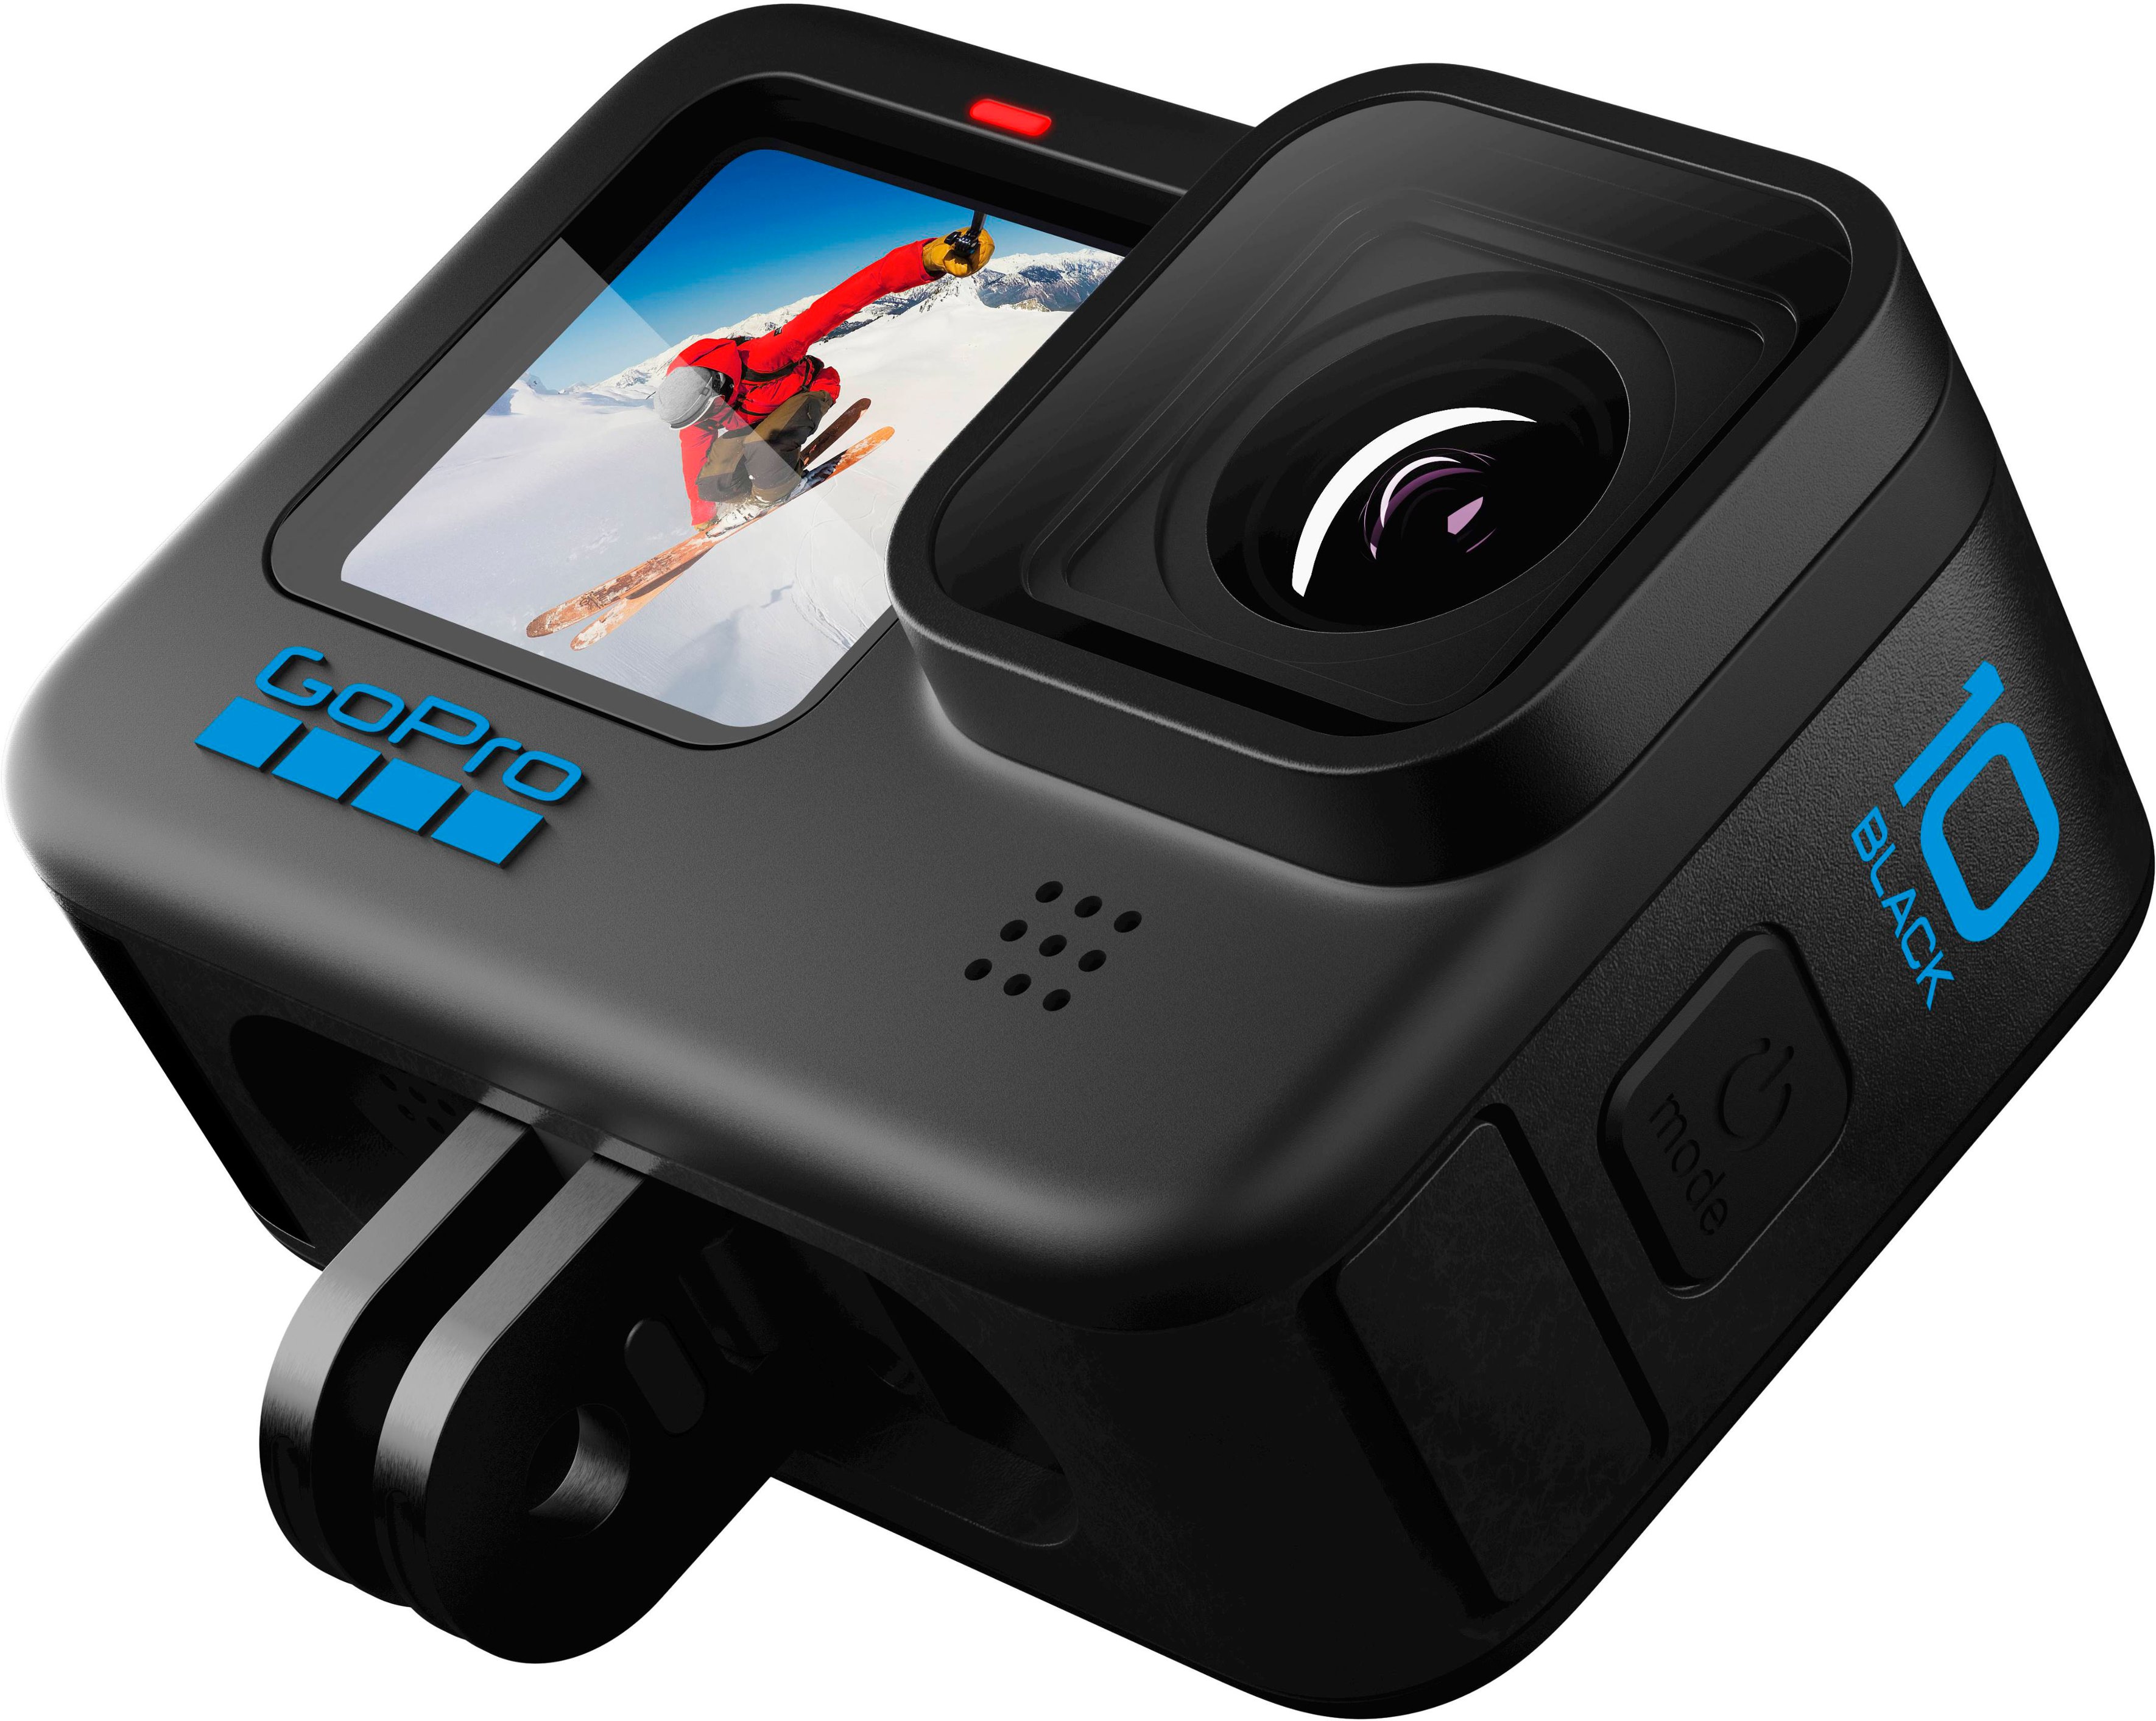 GoPro HERO10 Black Action Camera CHDHX-101-CN/CHDHX-101-TH - Best Buy